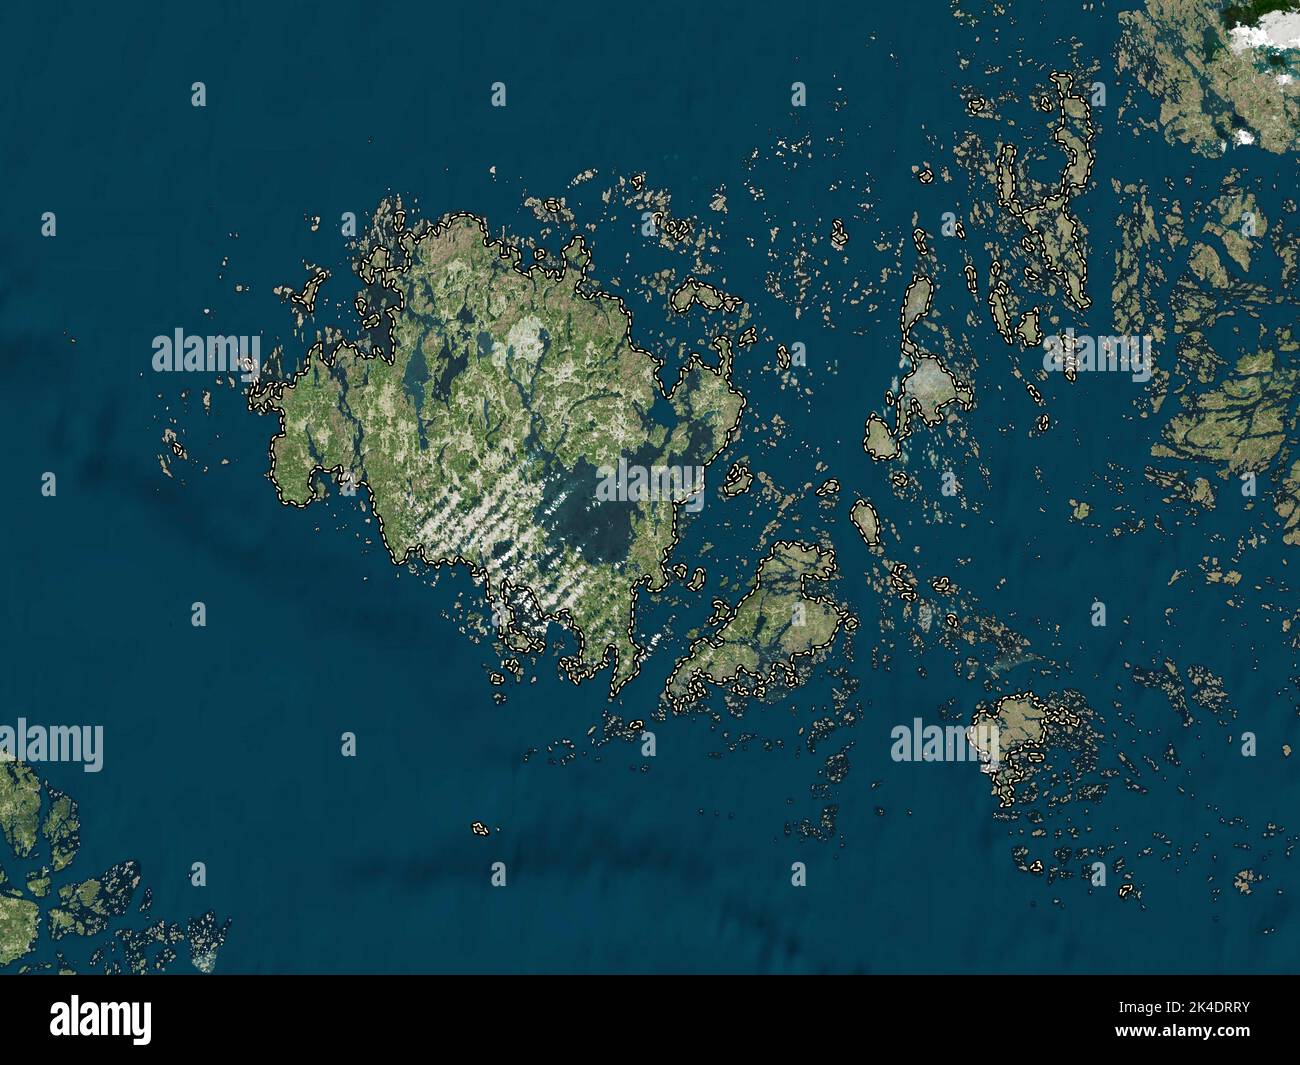 Aland, region of Finland. High resolution satellite map Stock Photo